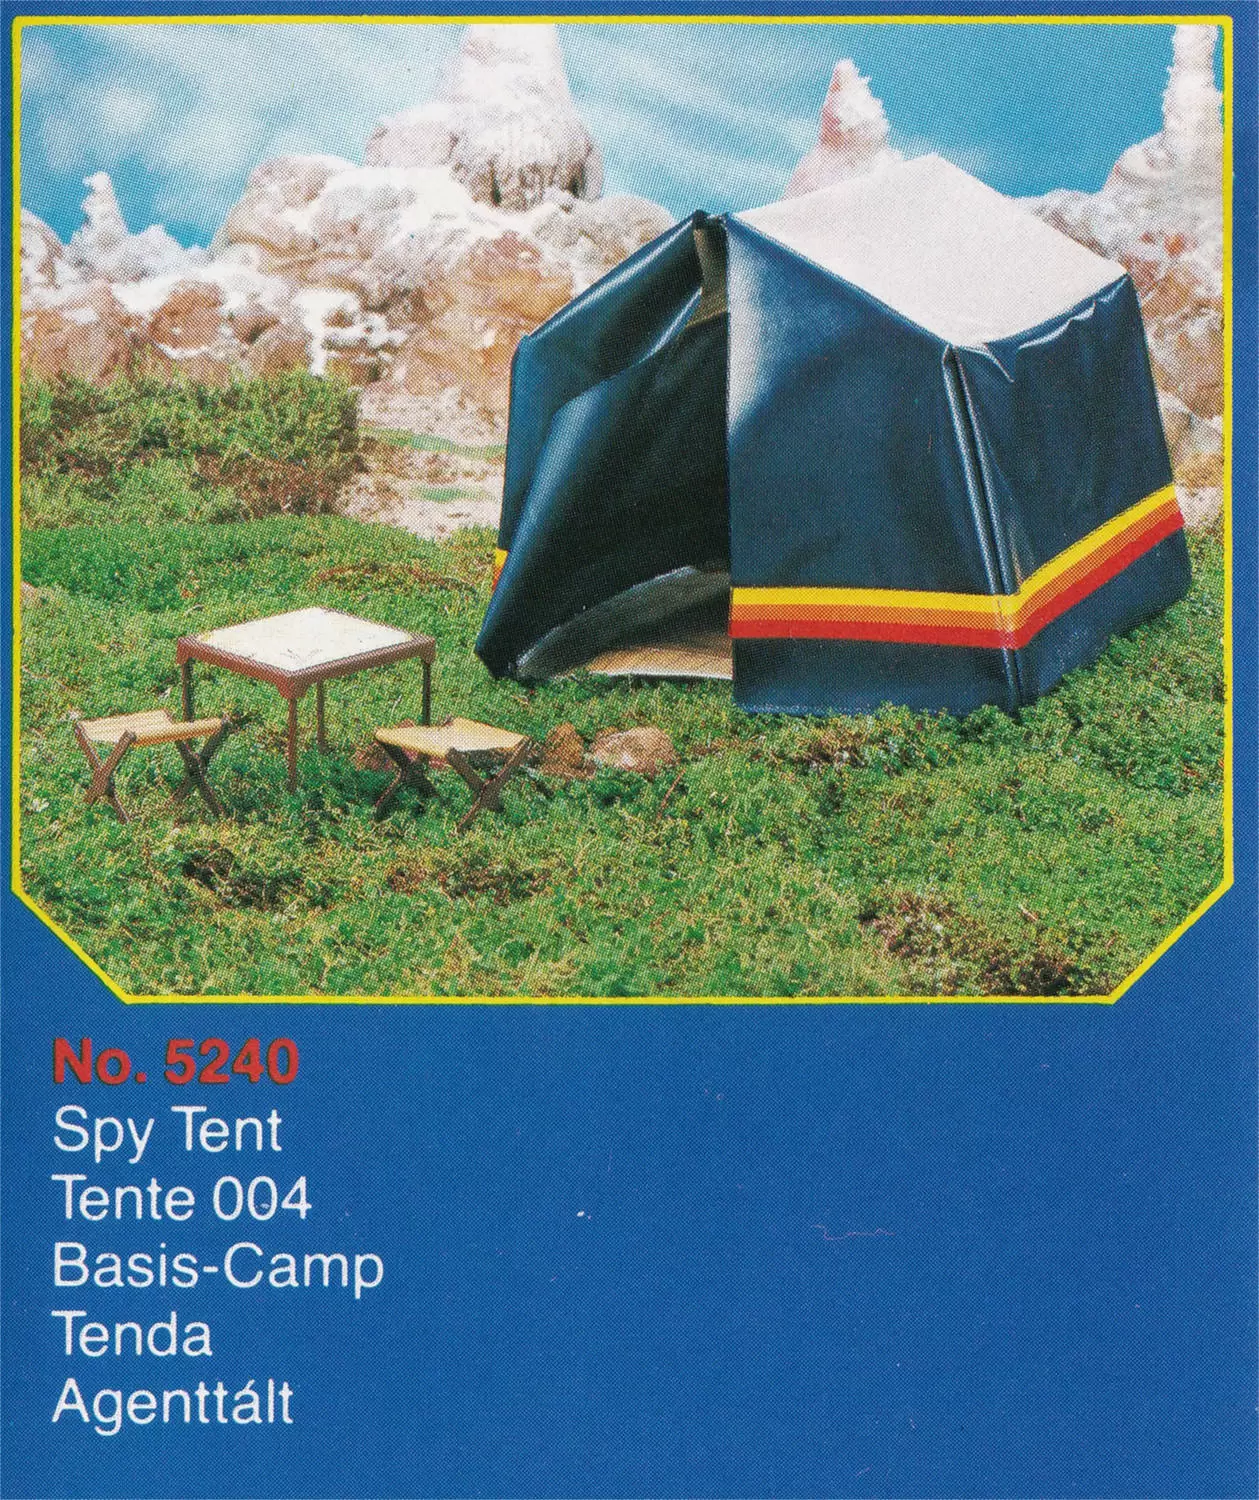 Big Jim Vehicles & accessories - Spy Tent